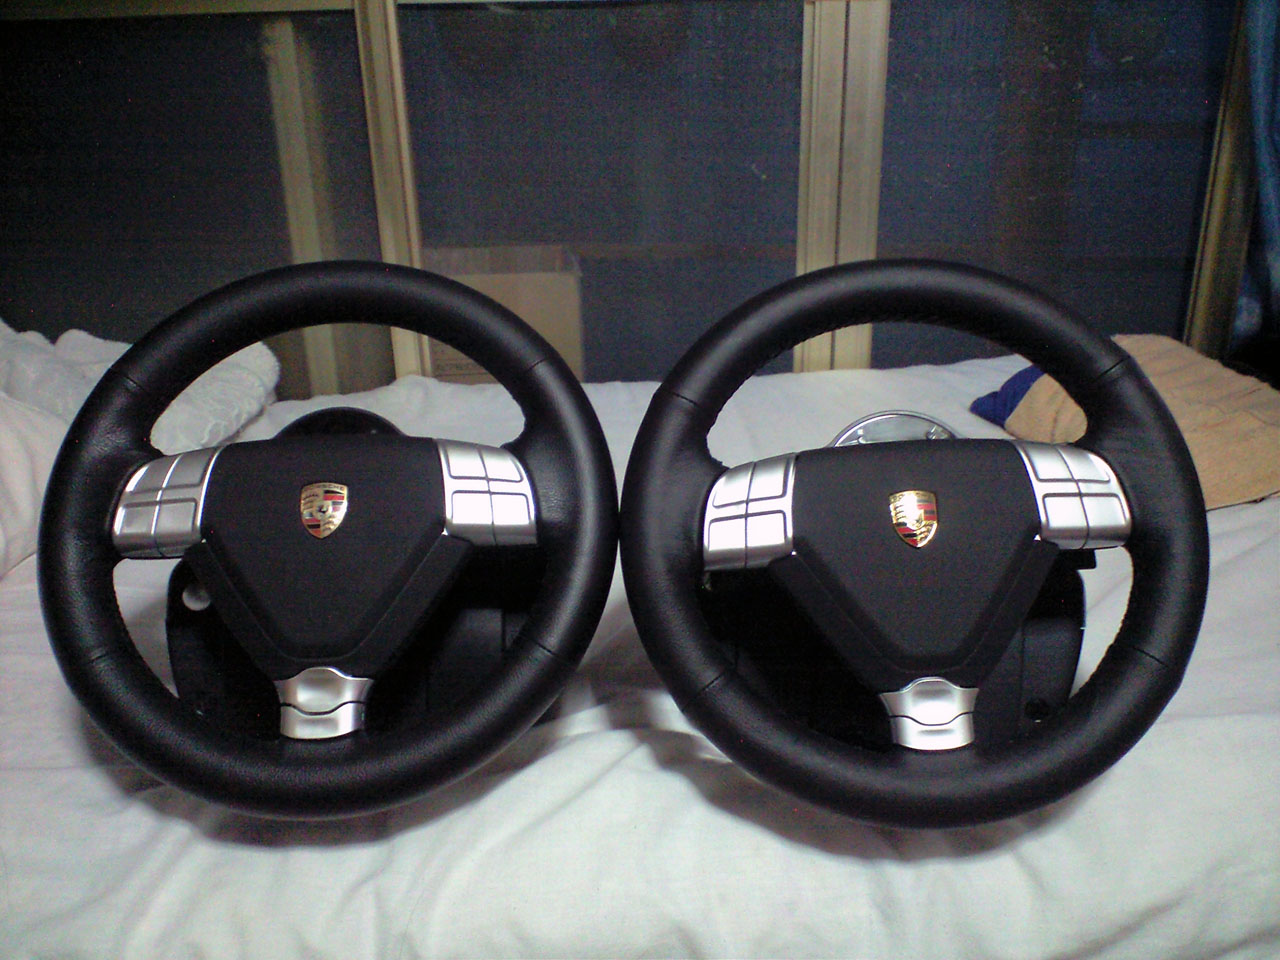 Fanatec Porsche 911 Turbo S Wheel 写真 正面 比較